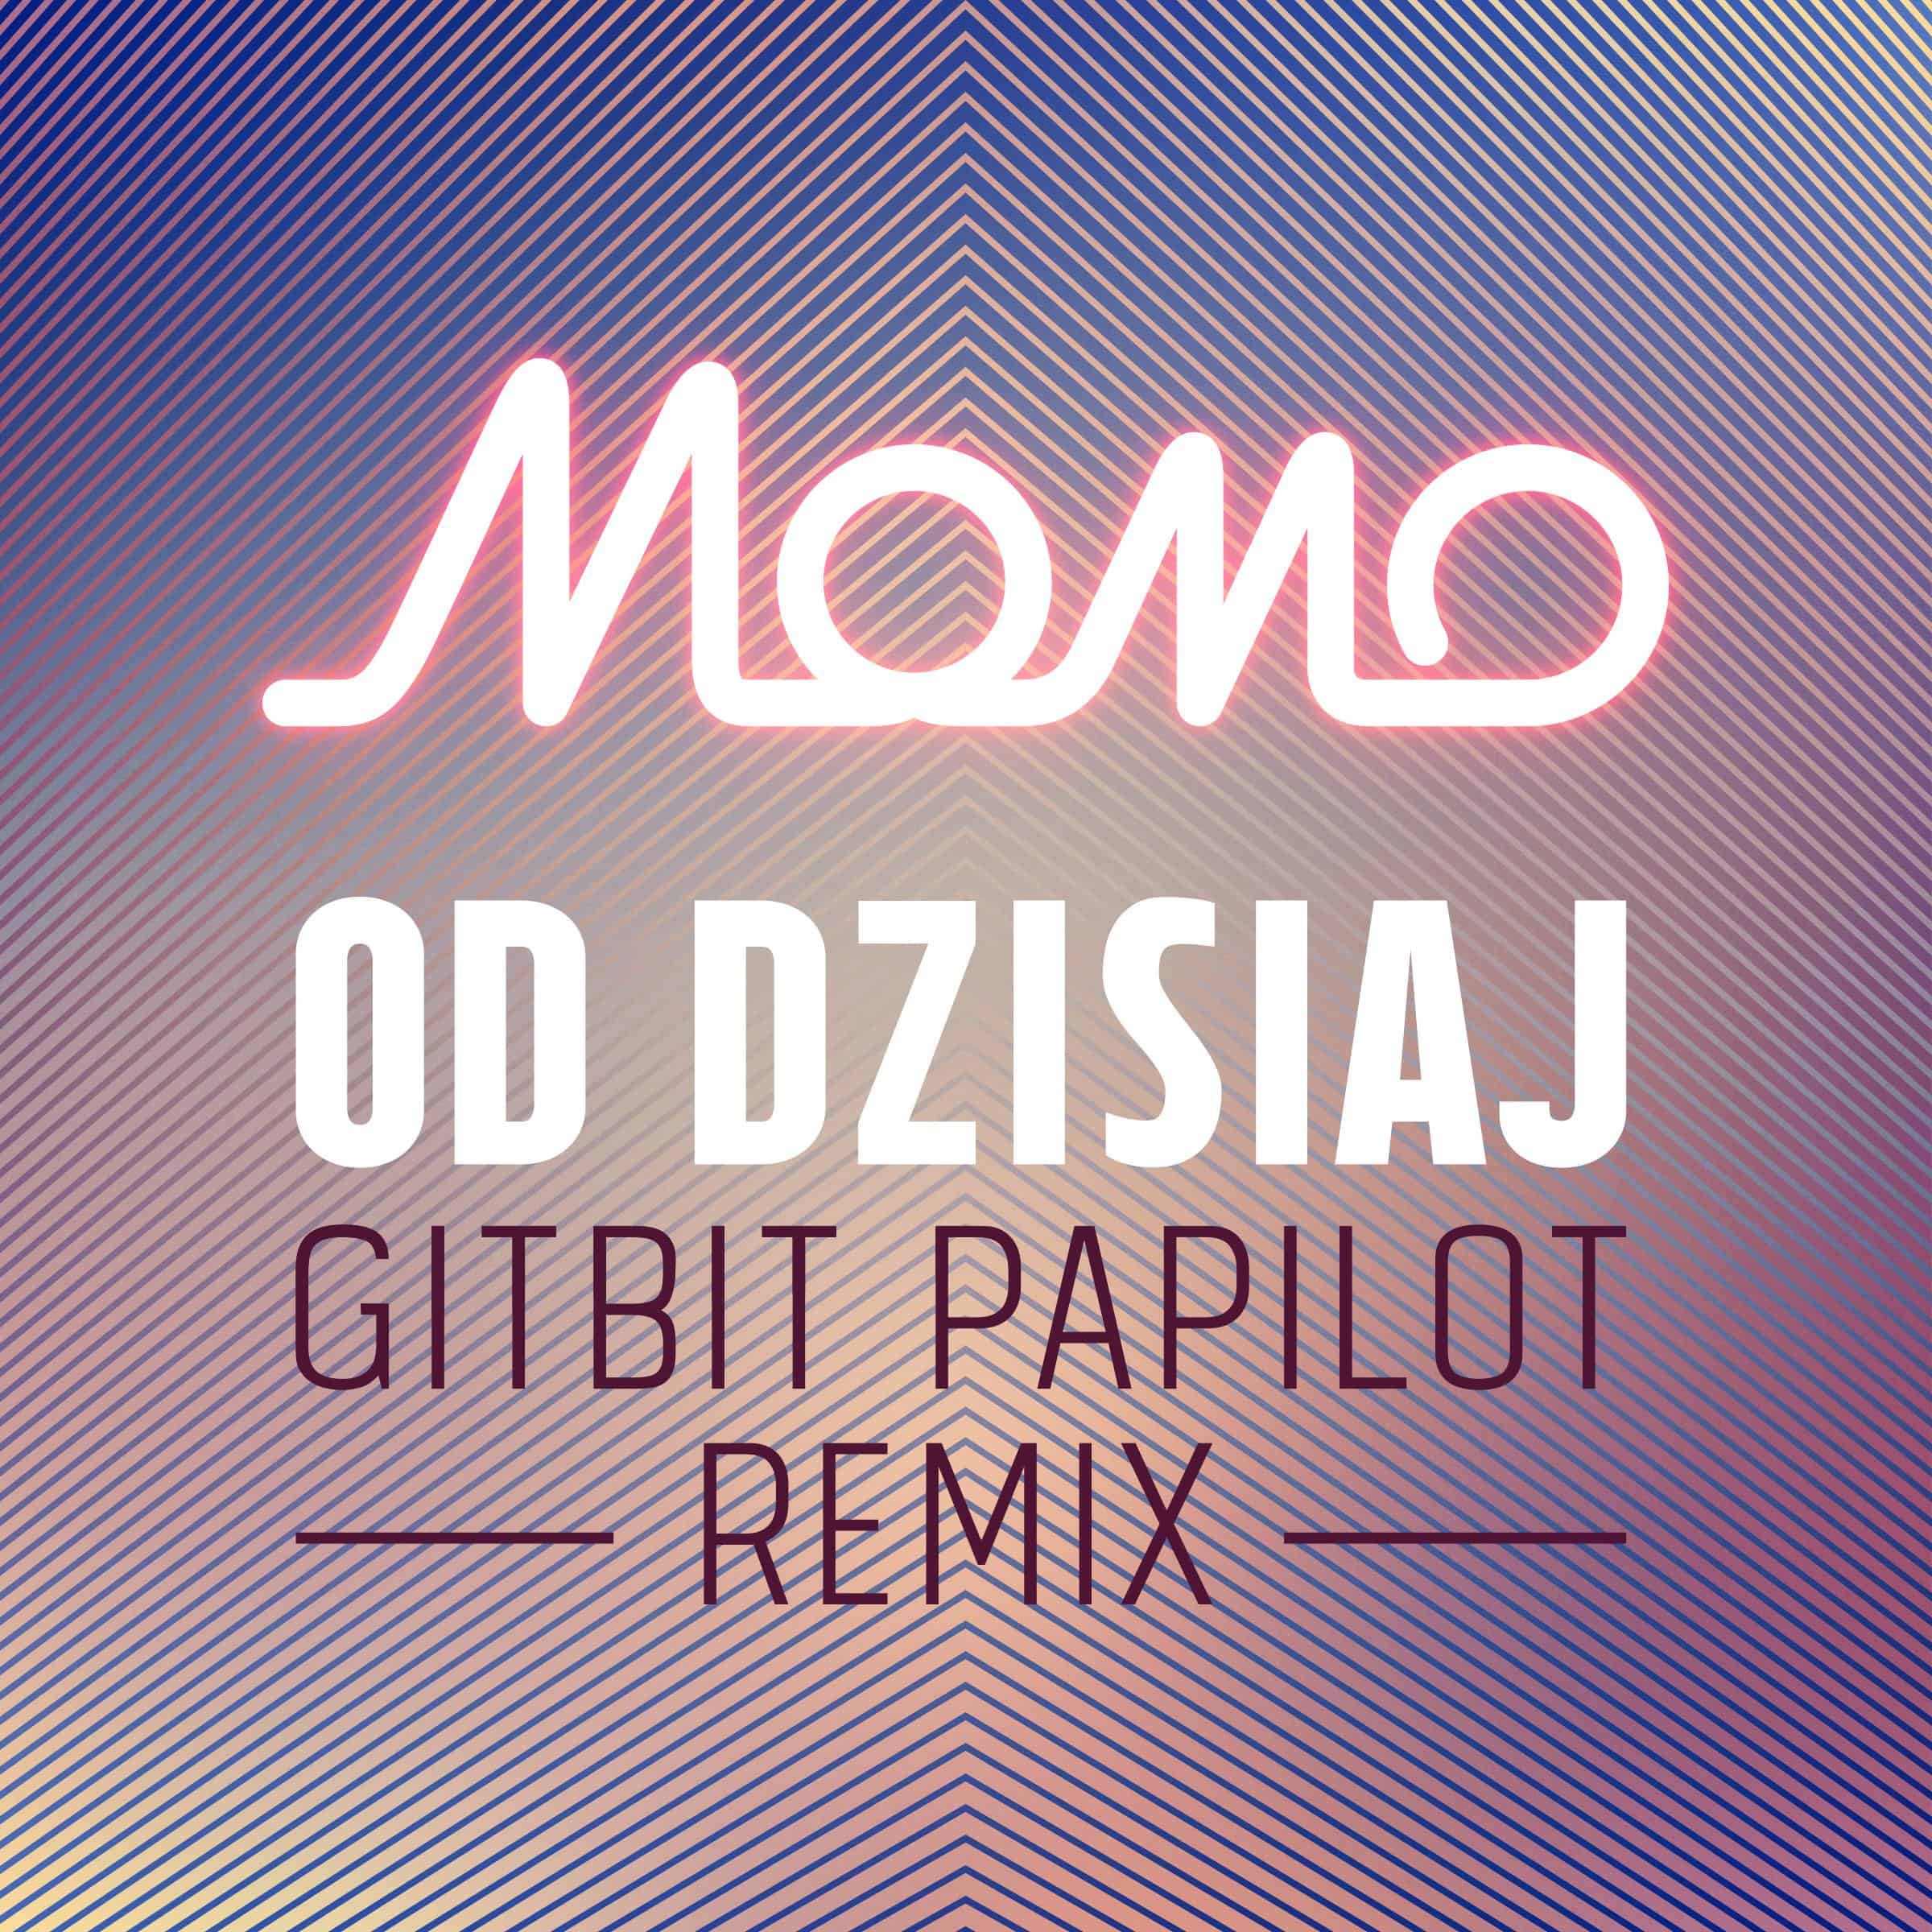 Premiera singla MoMo - Od dzisiaj (Gitbit Papilot Remix)